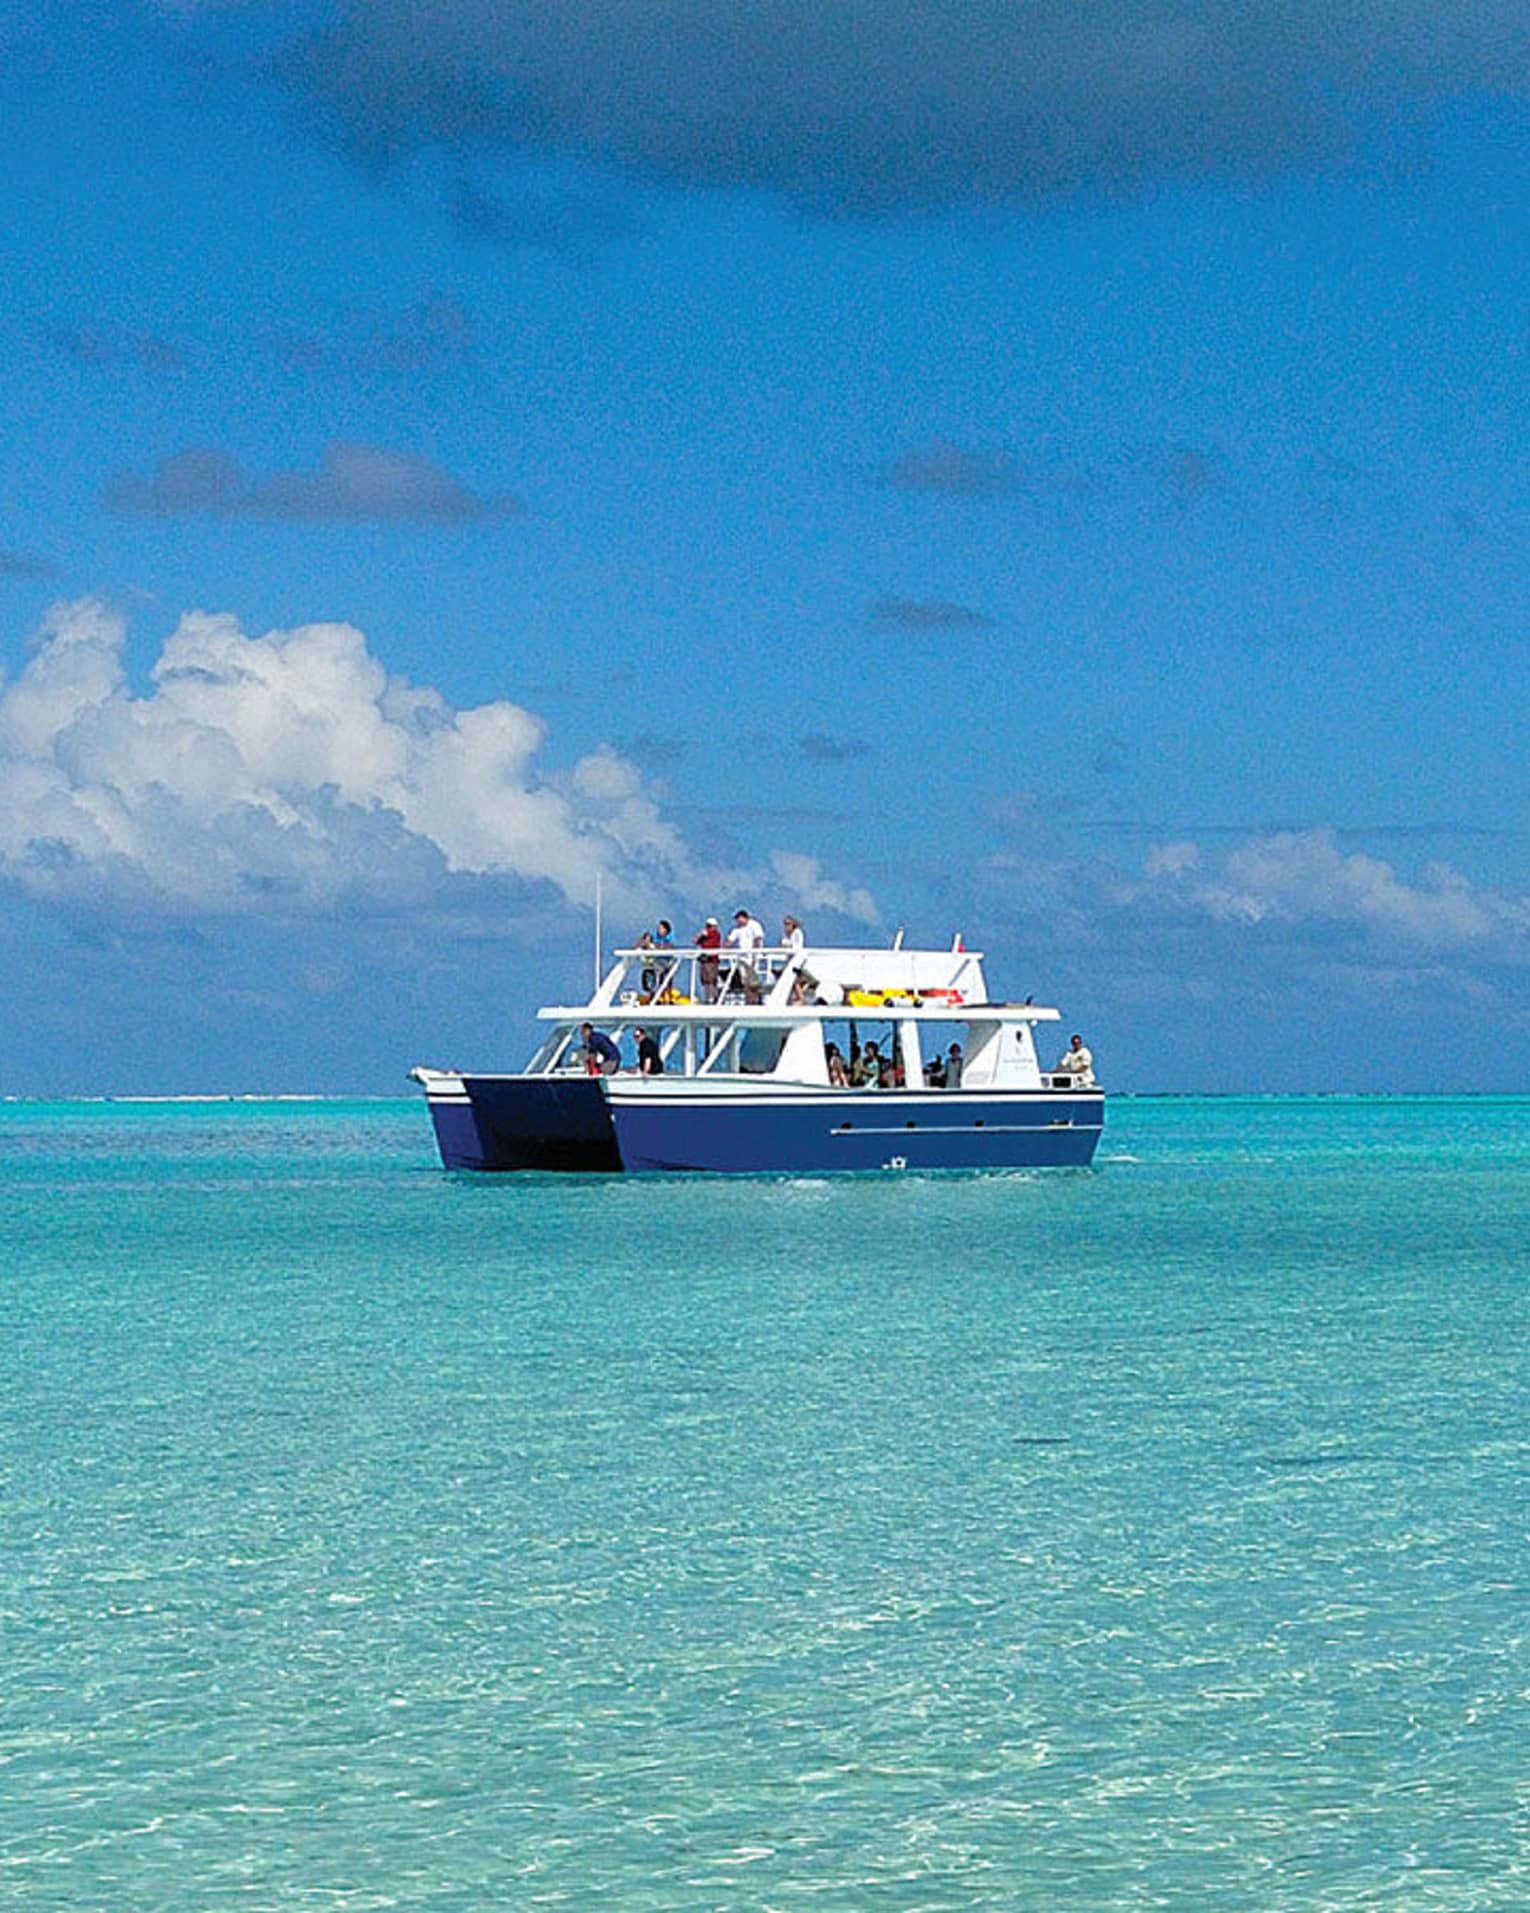 Guests on Four Seasons catamaran boat on lagoon